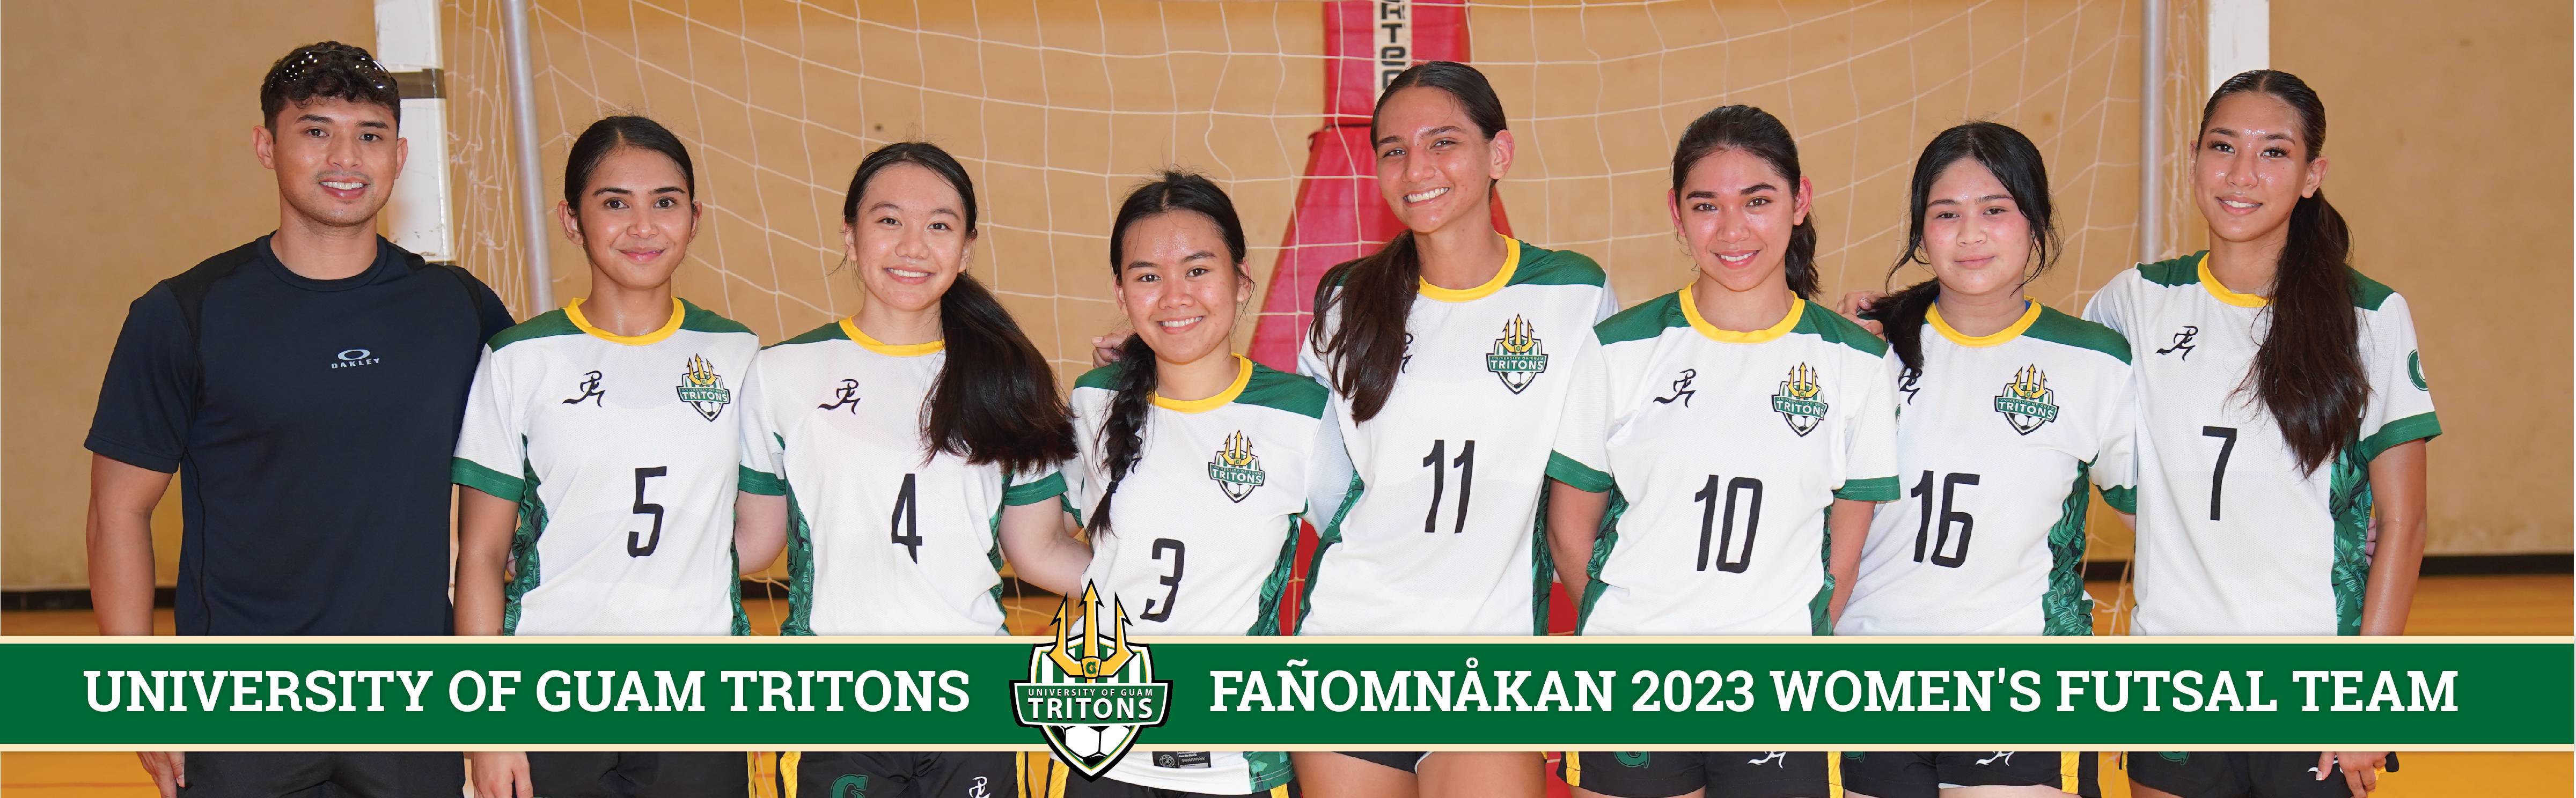 Triton Women's Futsal Team Fanomnakan 2023